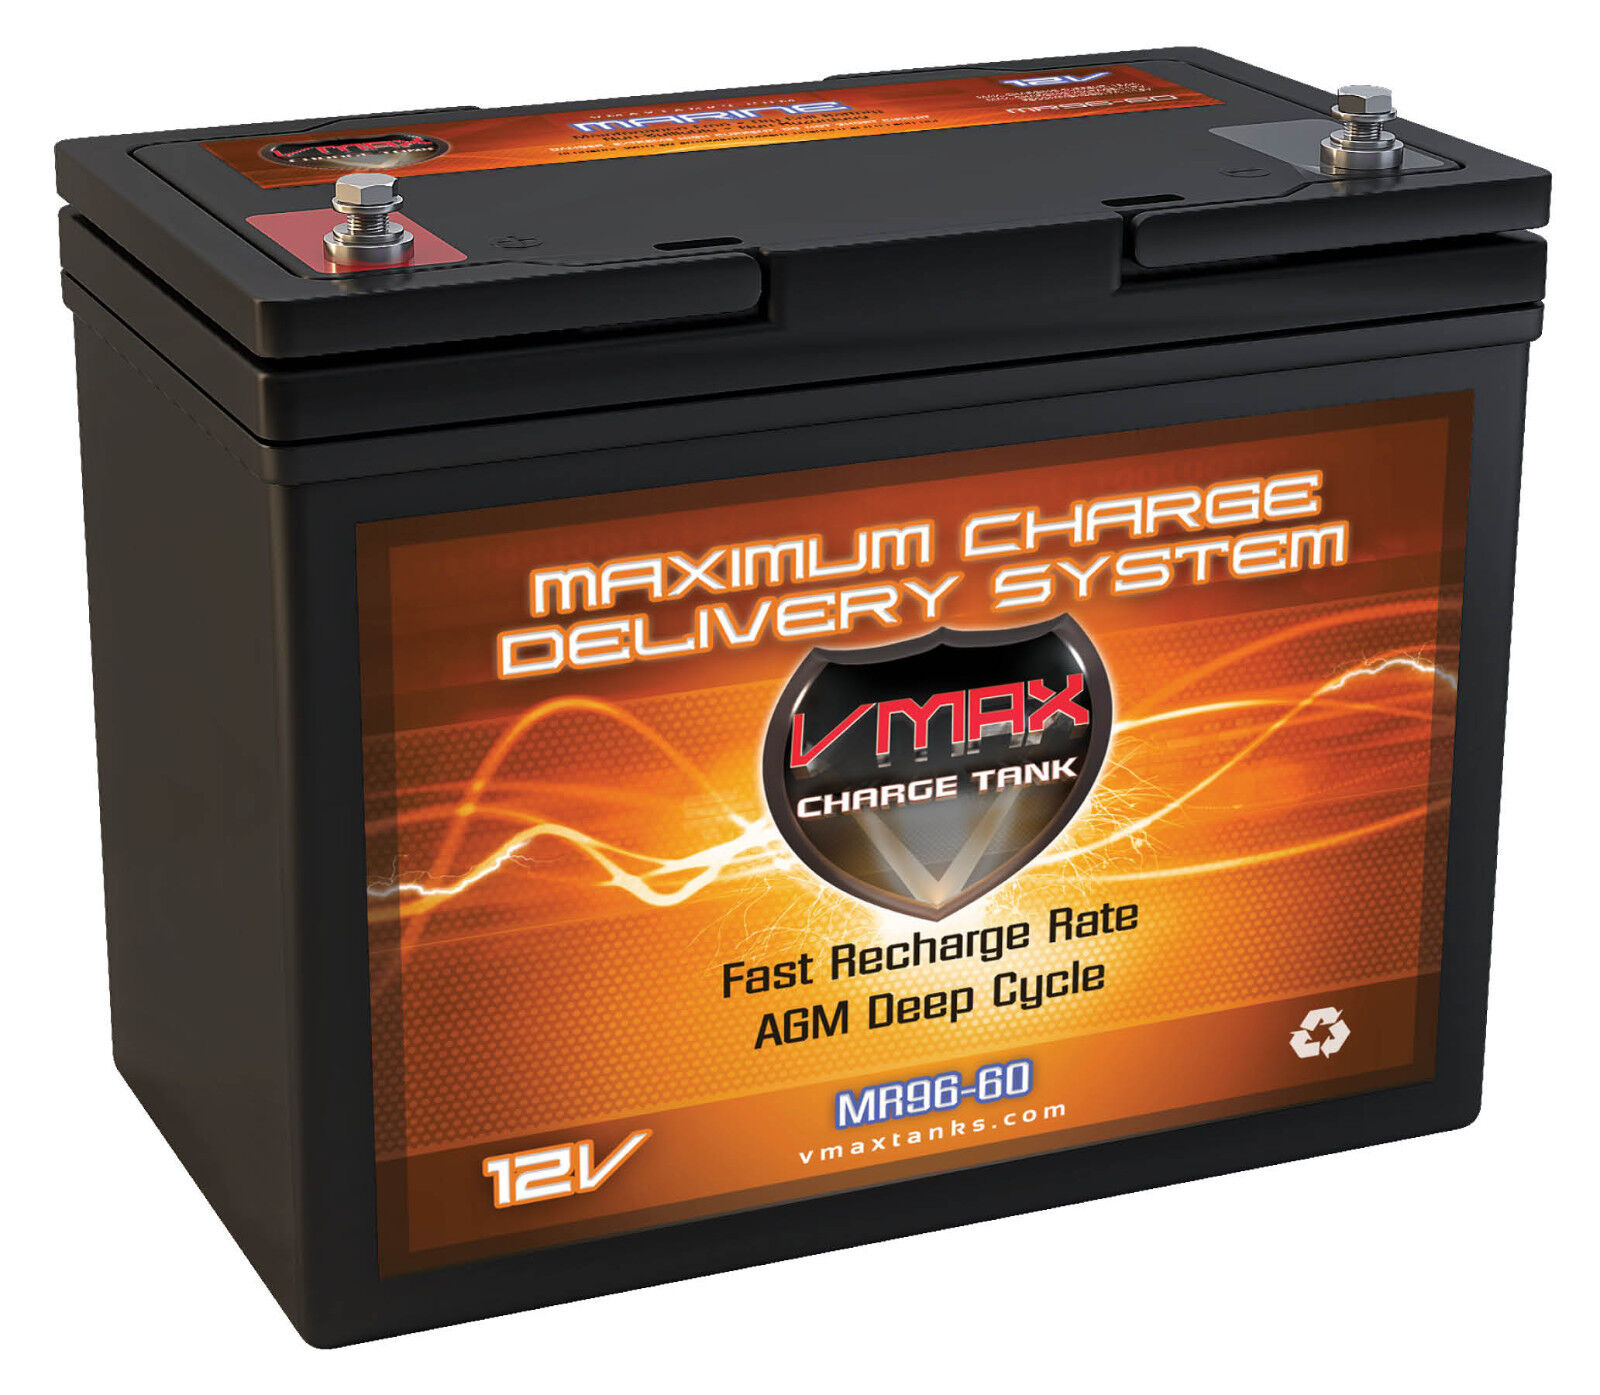 VMAX MR96 12V AGM deep cycle 40-50LB trolling maintenance free marine battery 